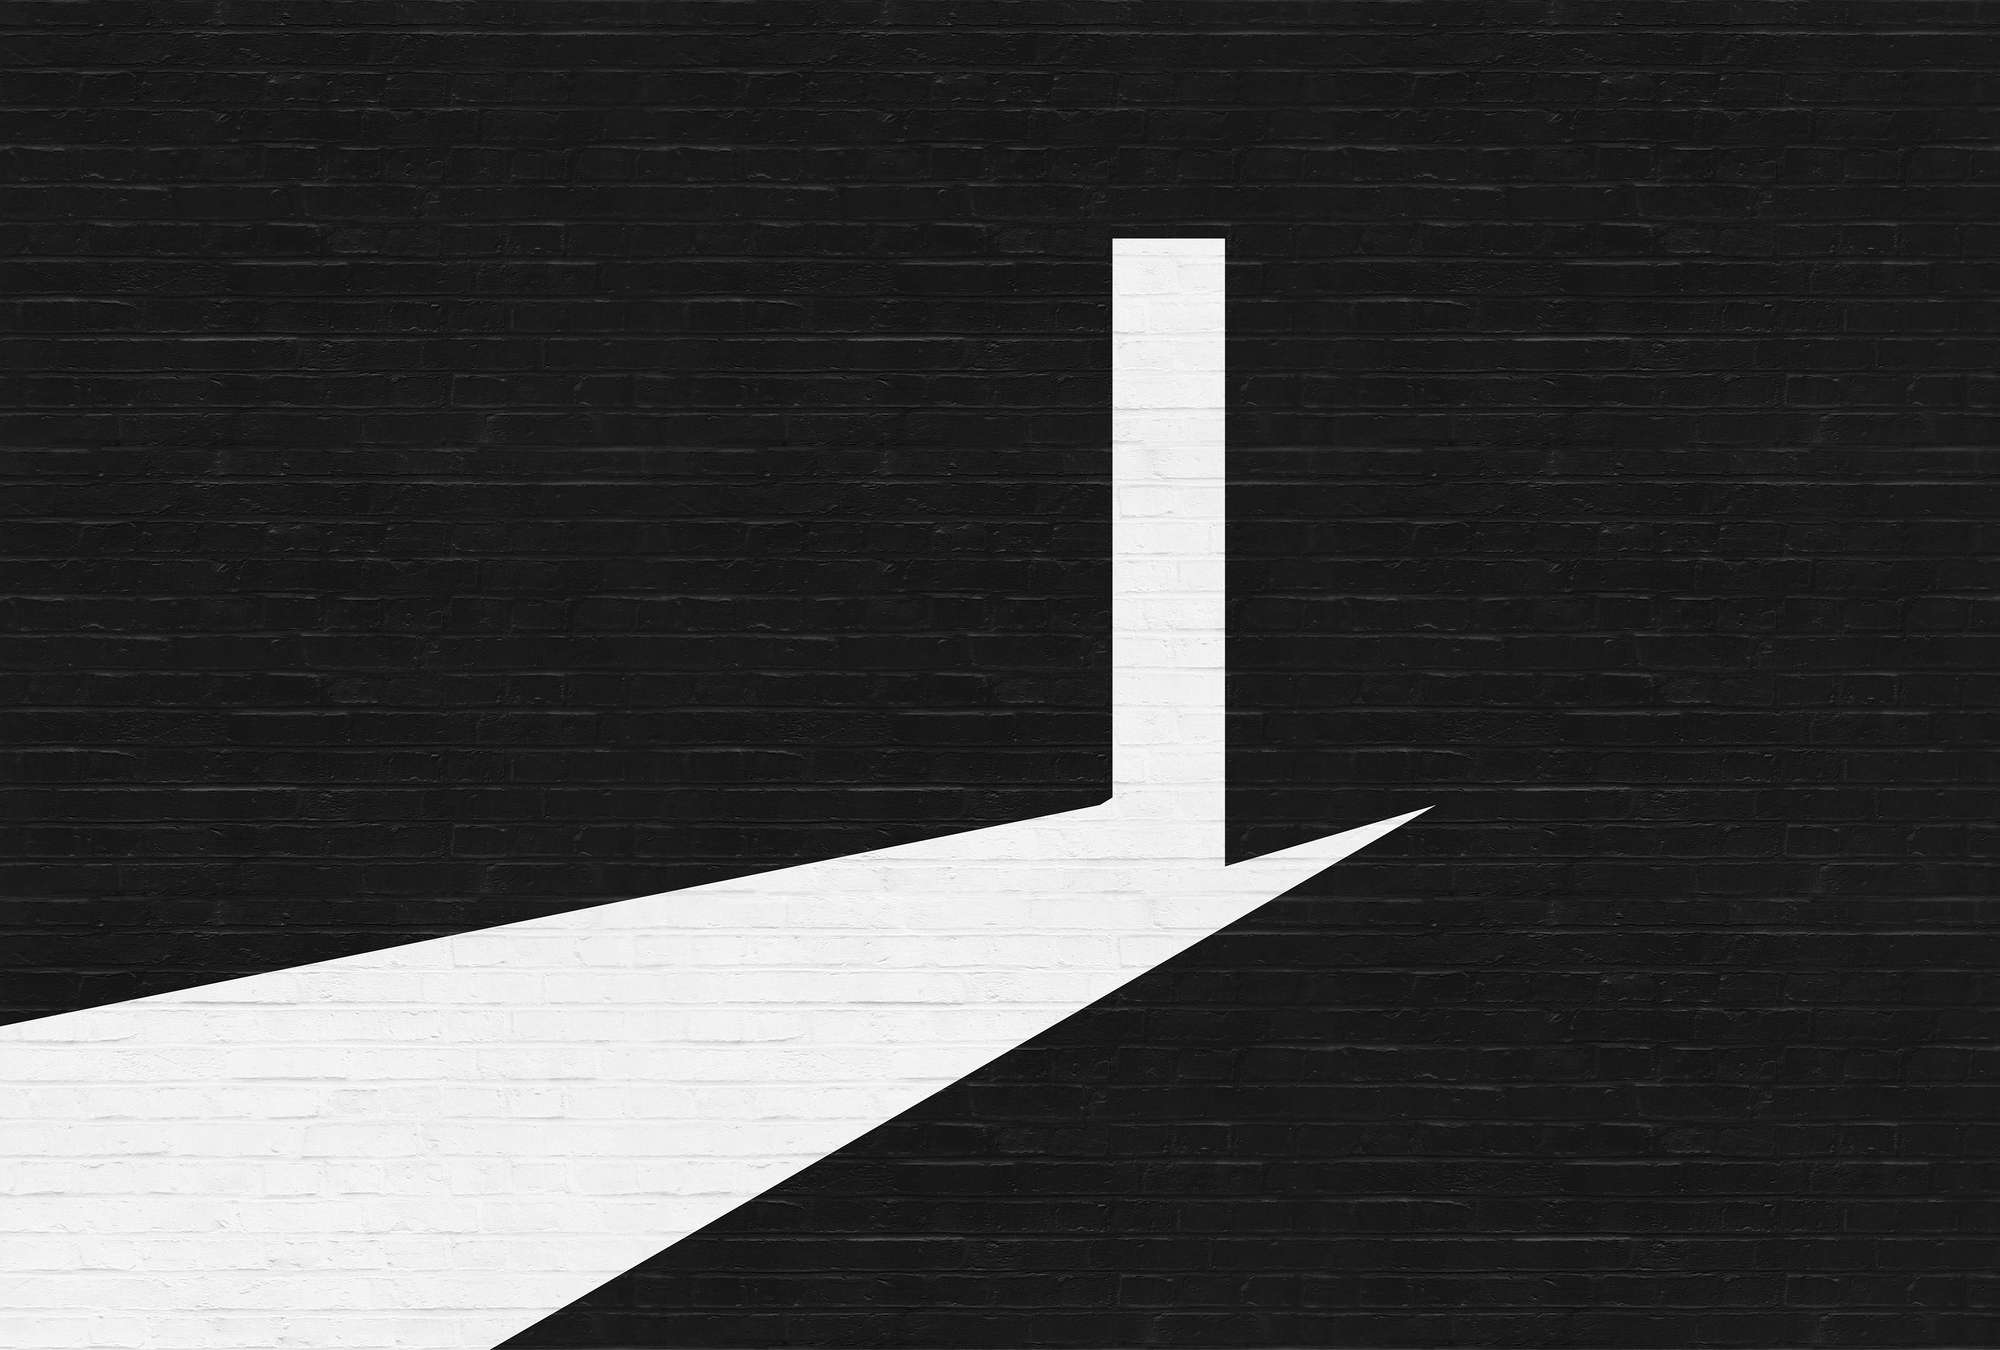             Photo wallpaper brick, black and white graphic design - White, Black
        